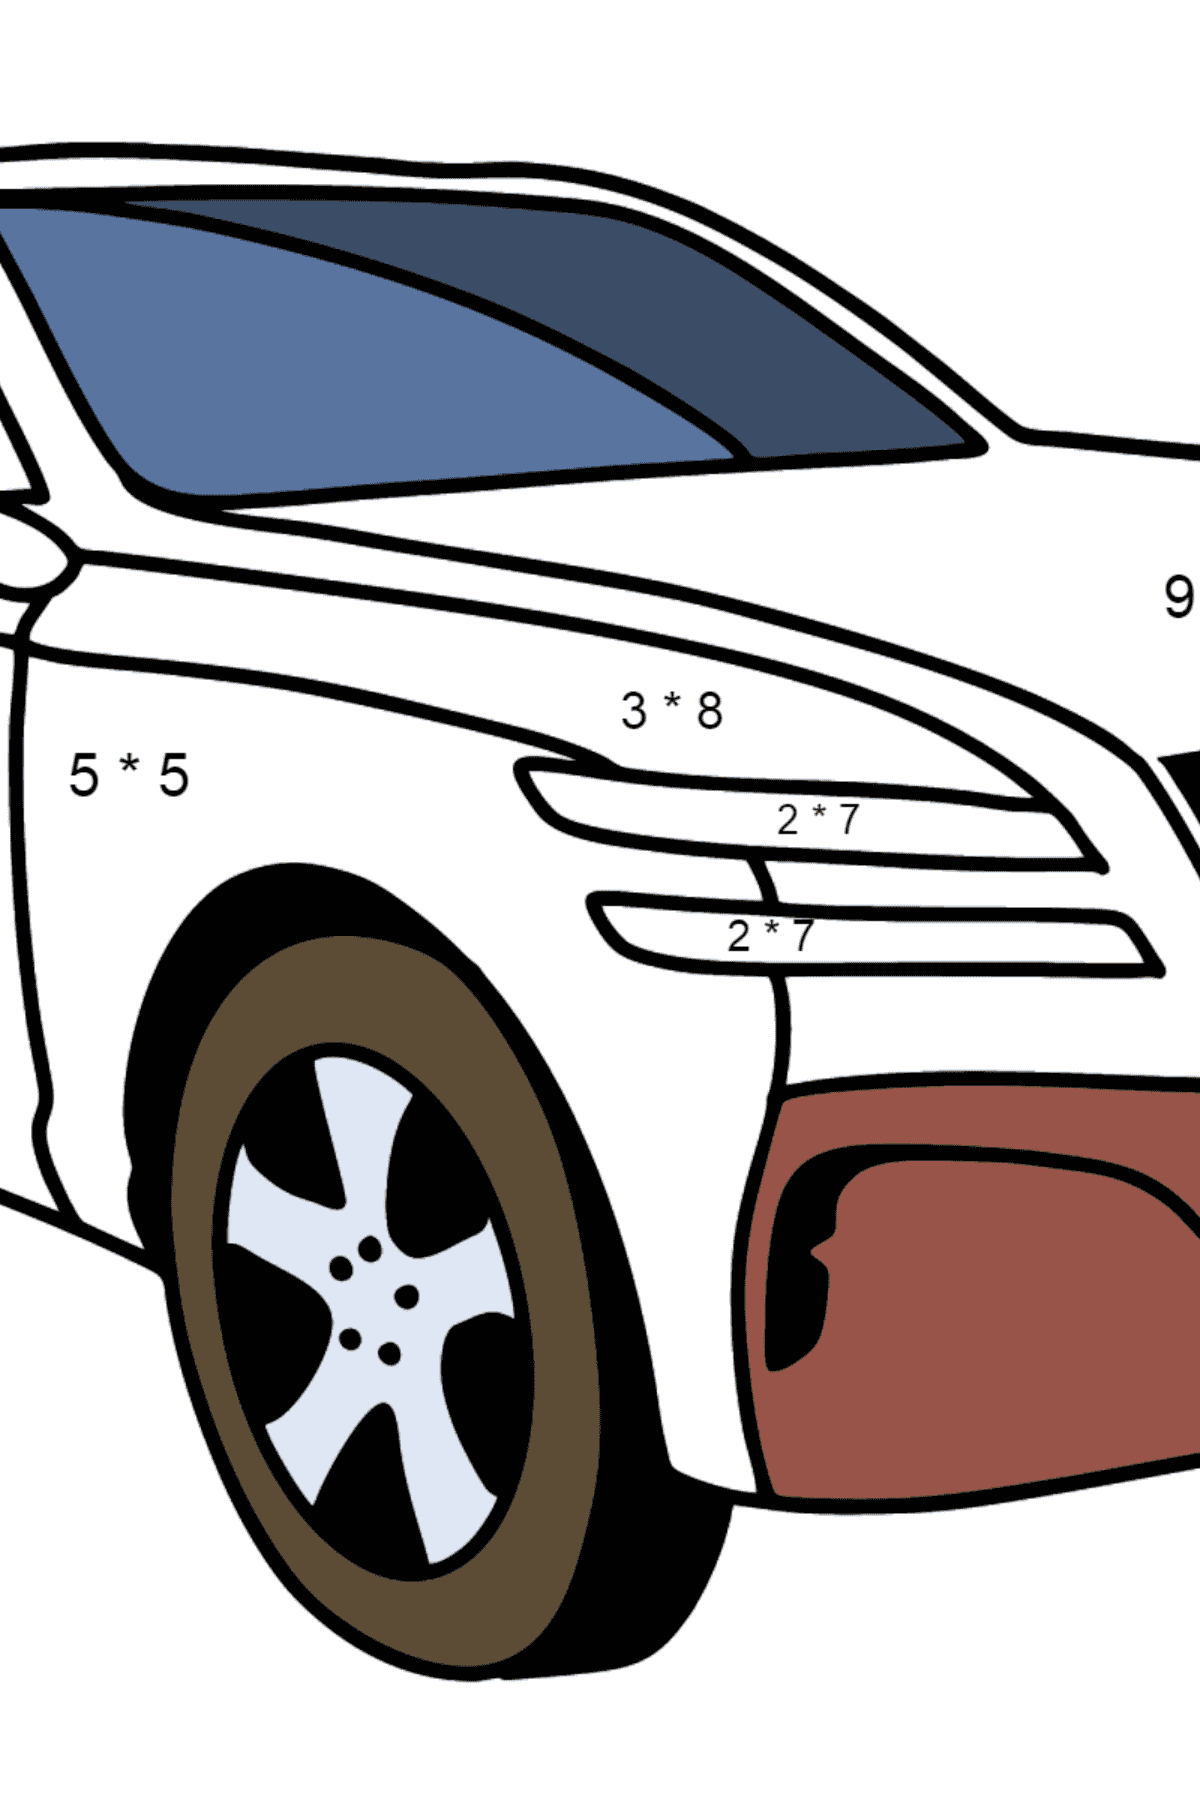 Genesis Auto Ausmalbild - Mathe Ausmalbilder - Multiplikation für Kinder